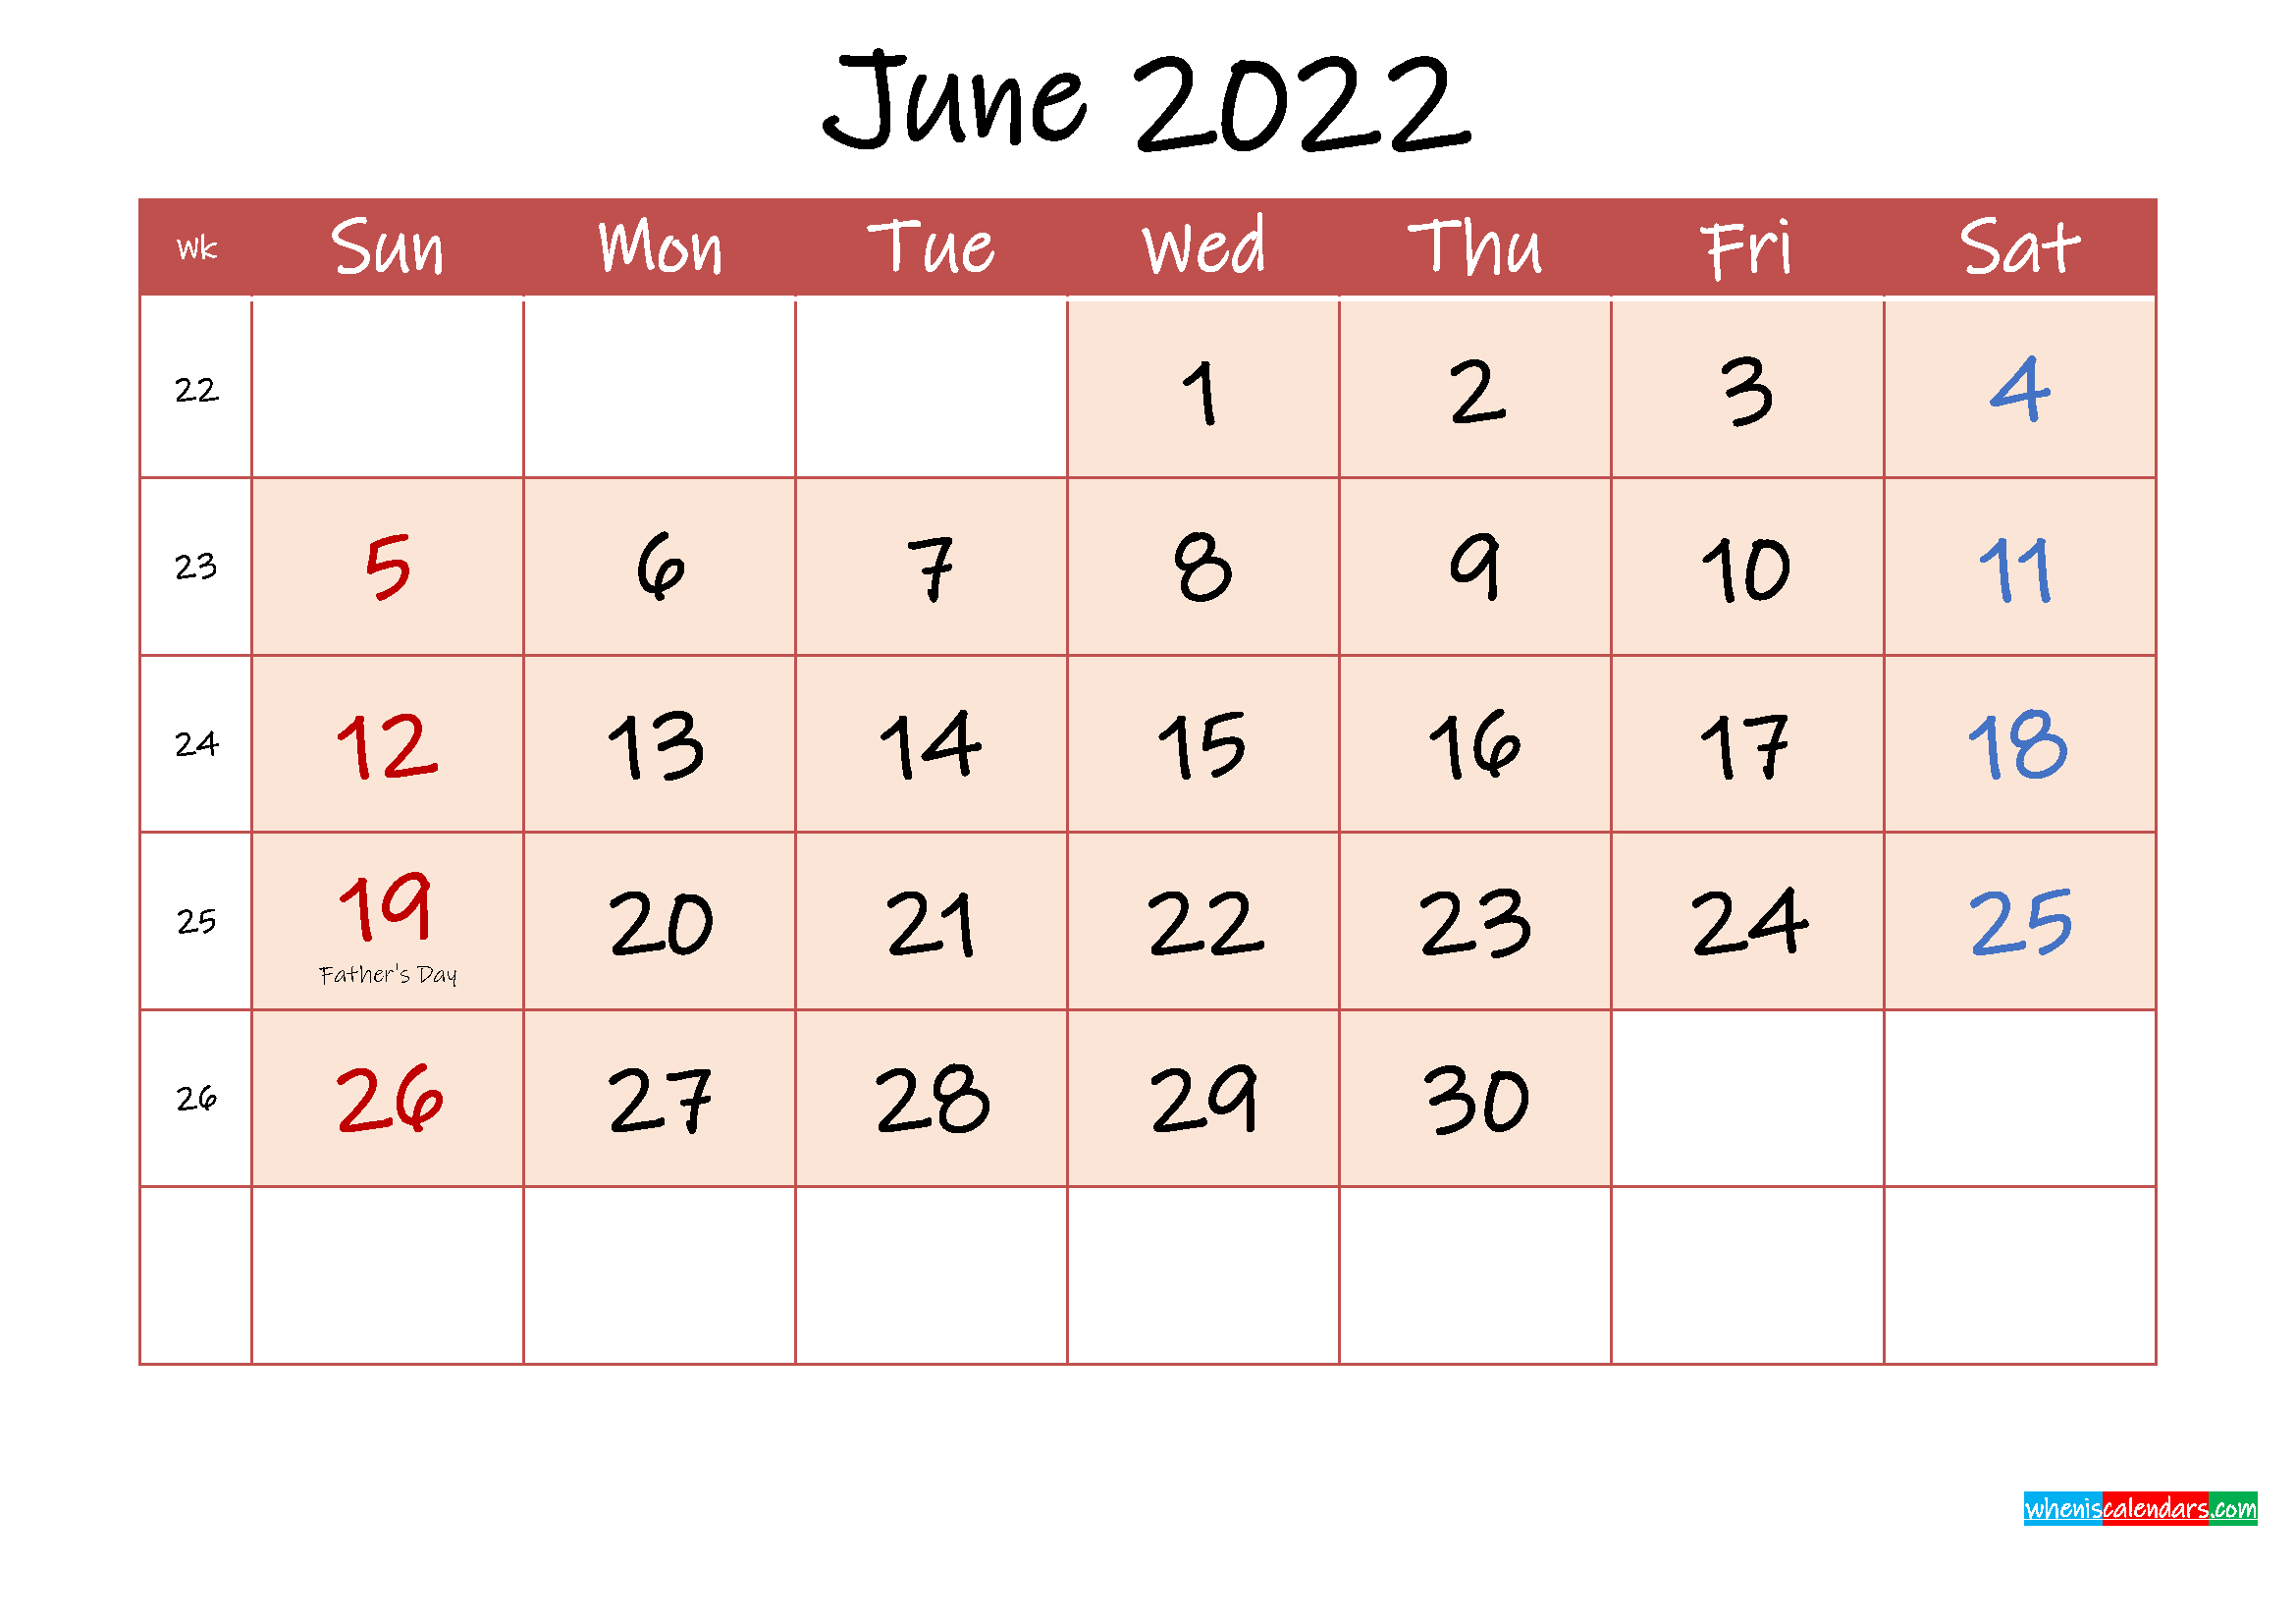 June 2022 Free Printable Calendar With Holidays - Template  June Printable Calendar 2022